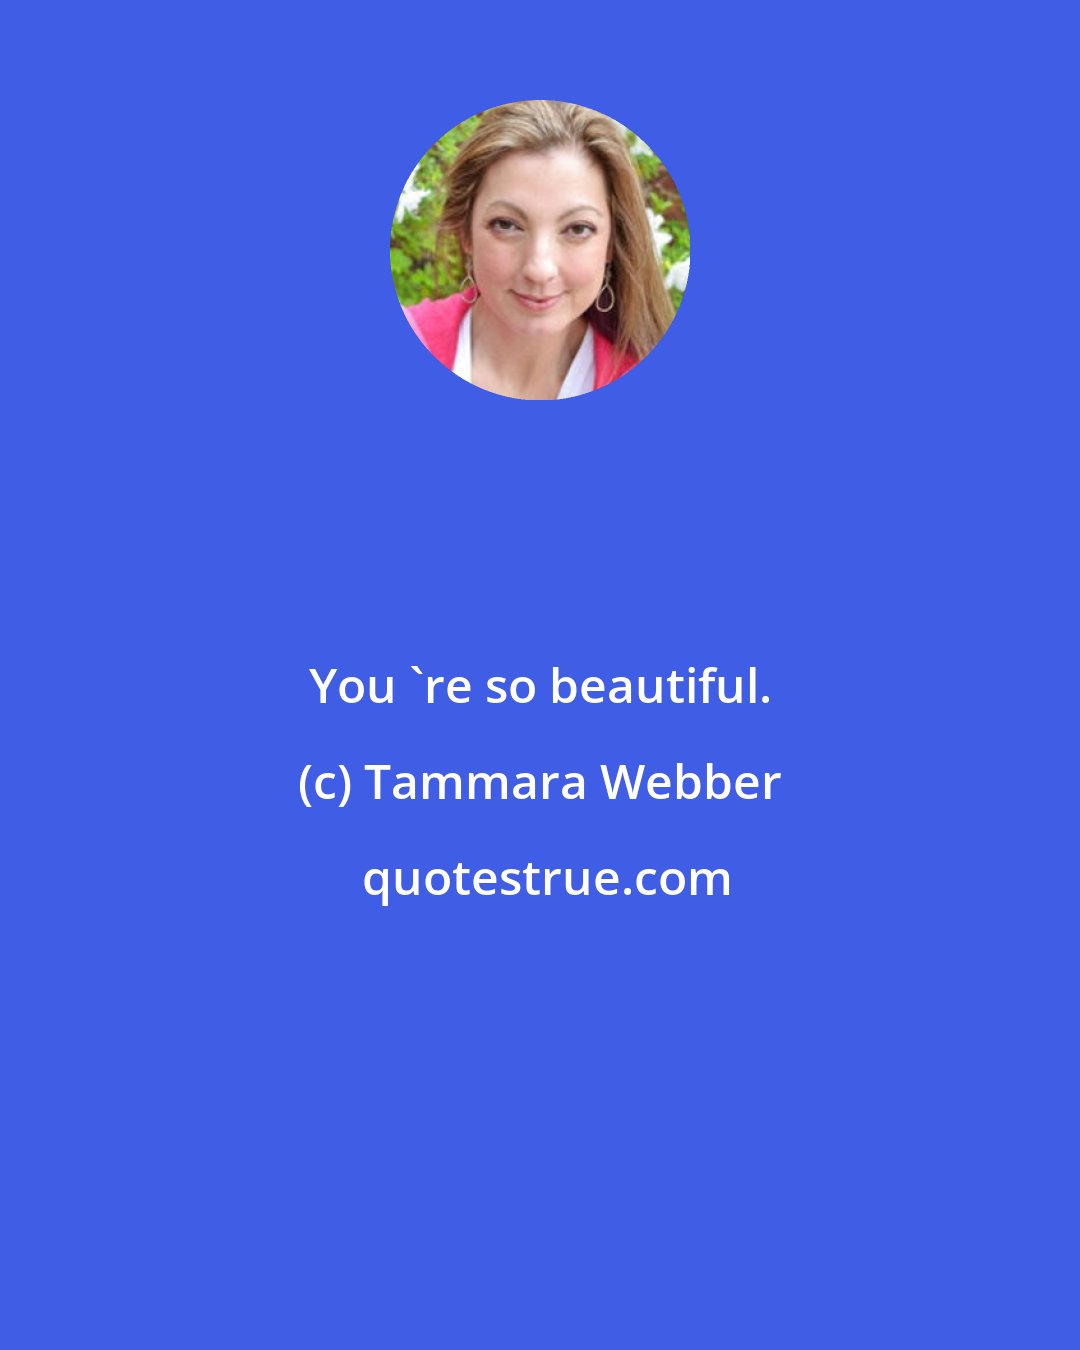 Tammara Webber: You 're so beautiful.